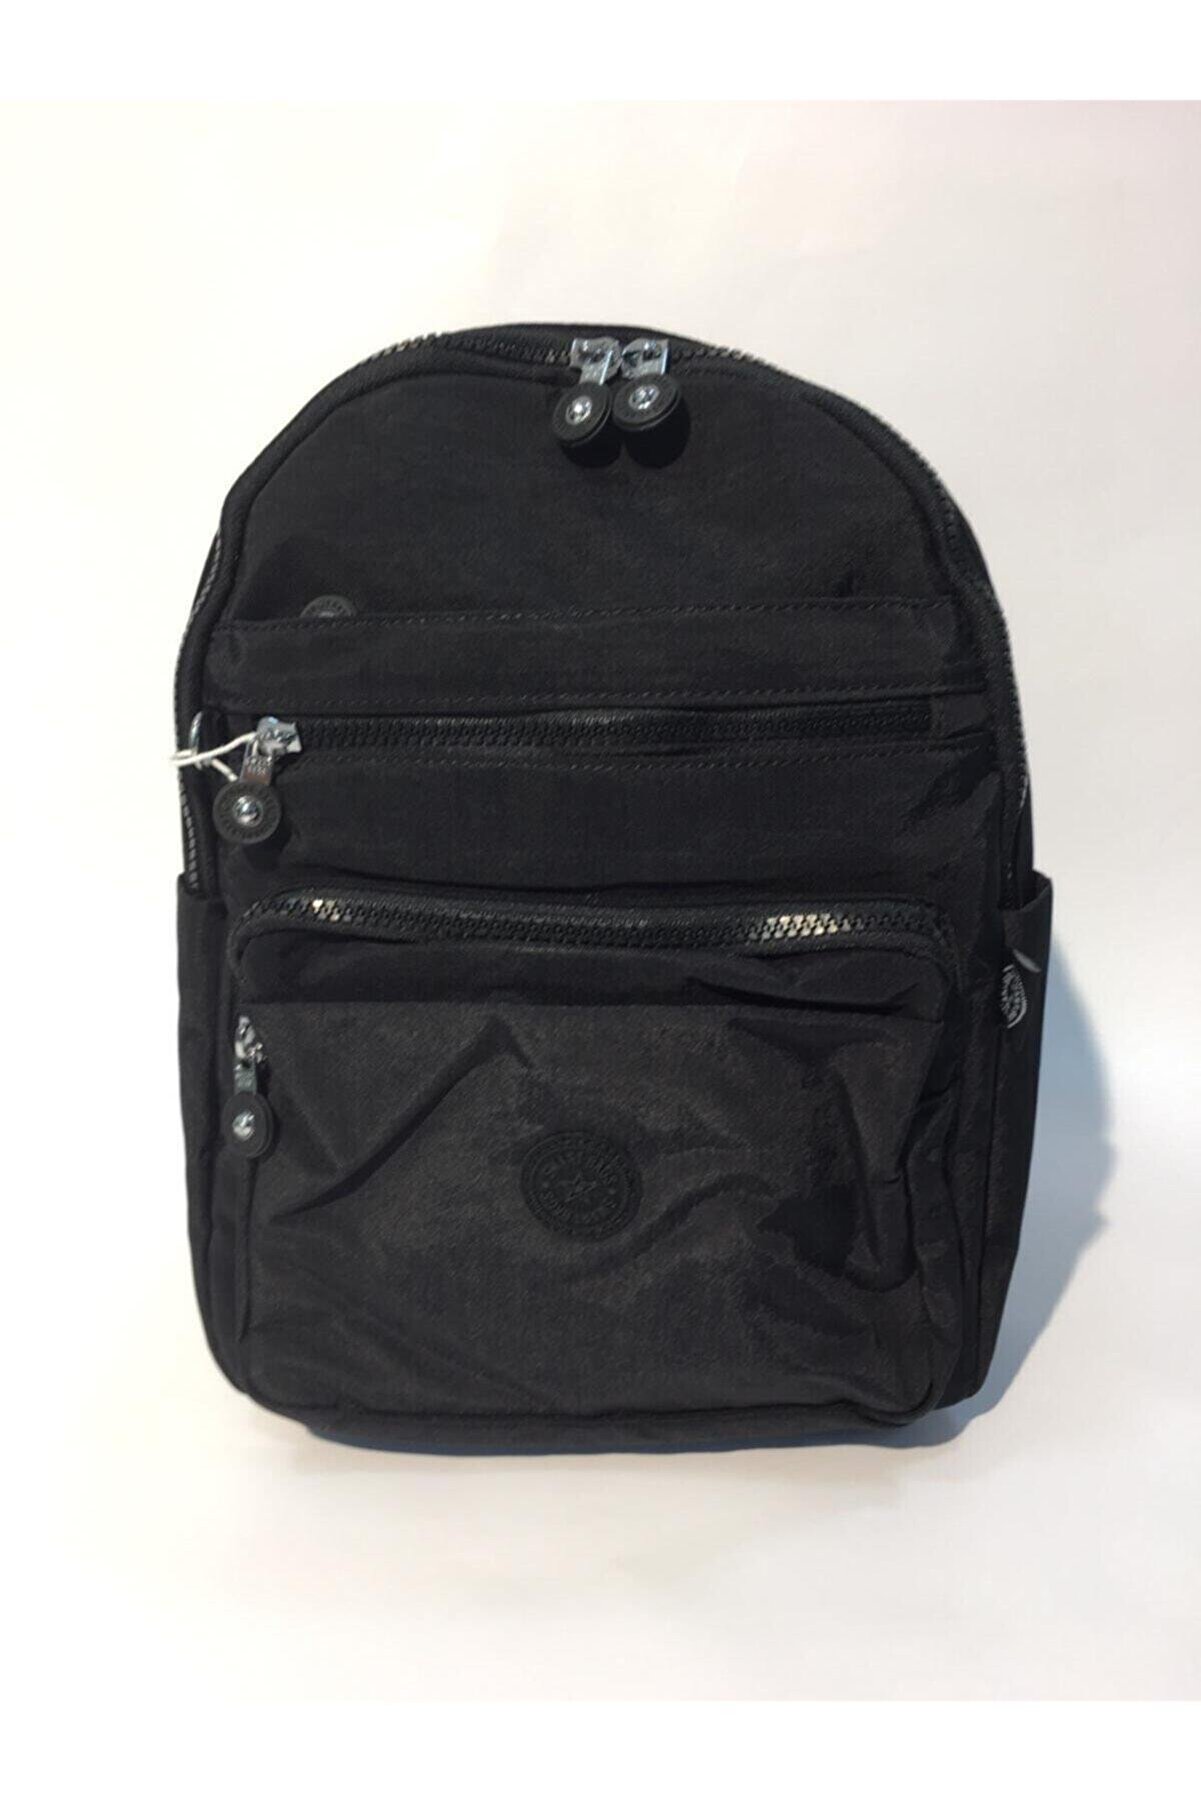 Smart Bags Smb3060 Siyah-0001 Kadın Sırt Çantası